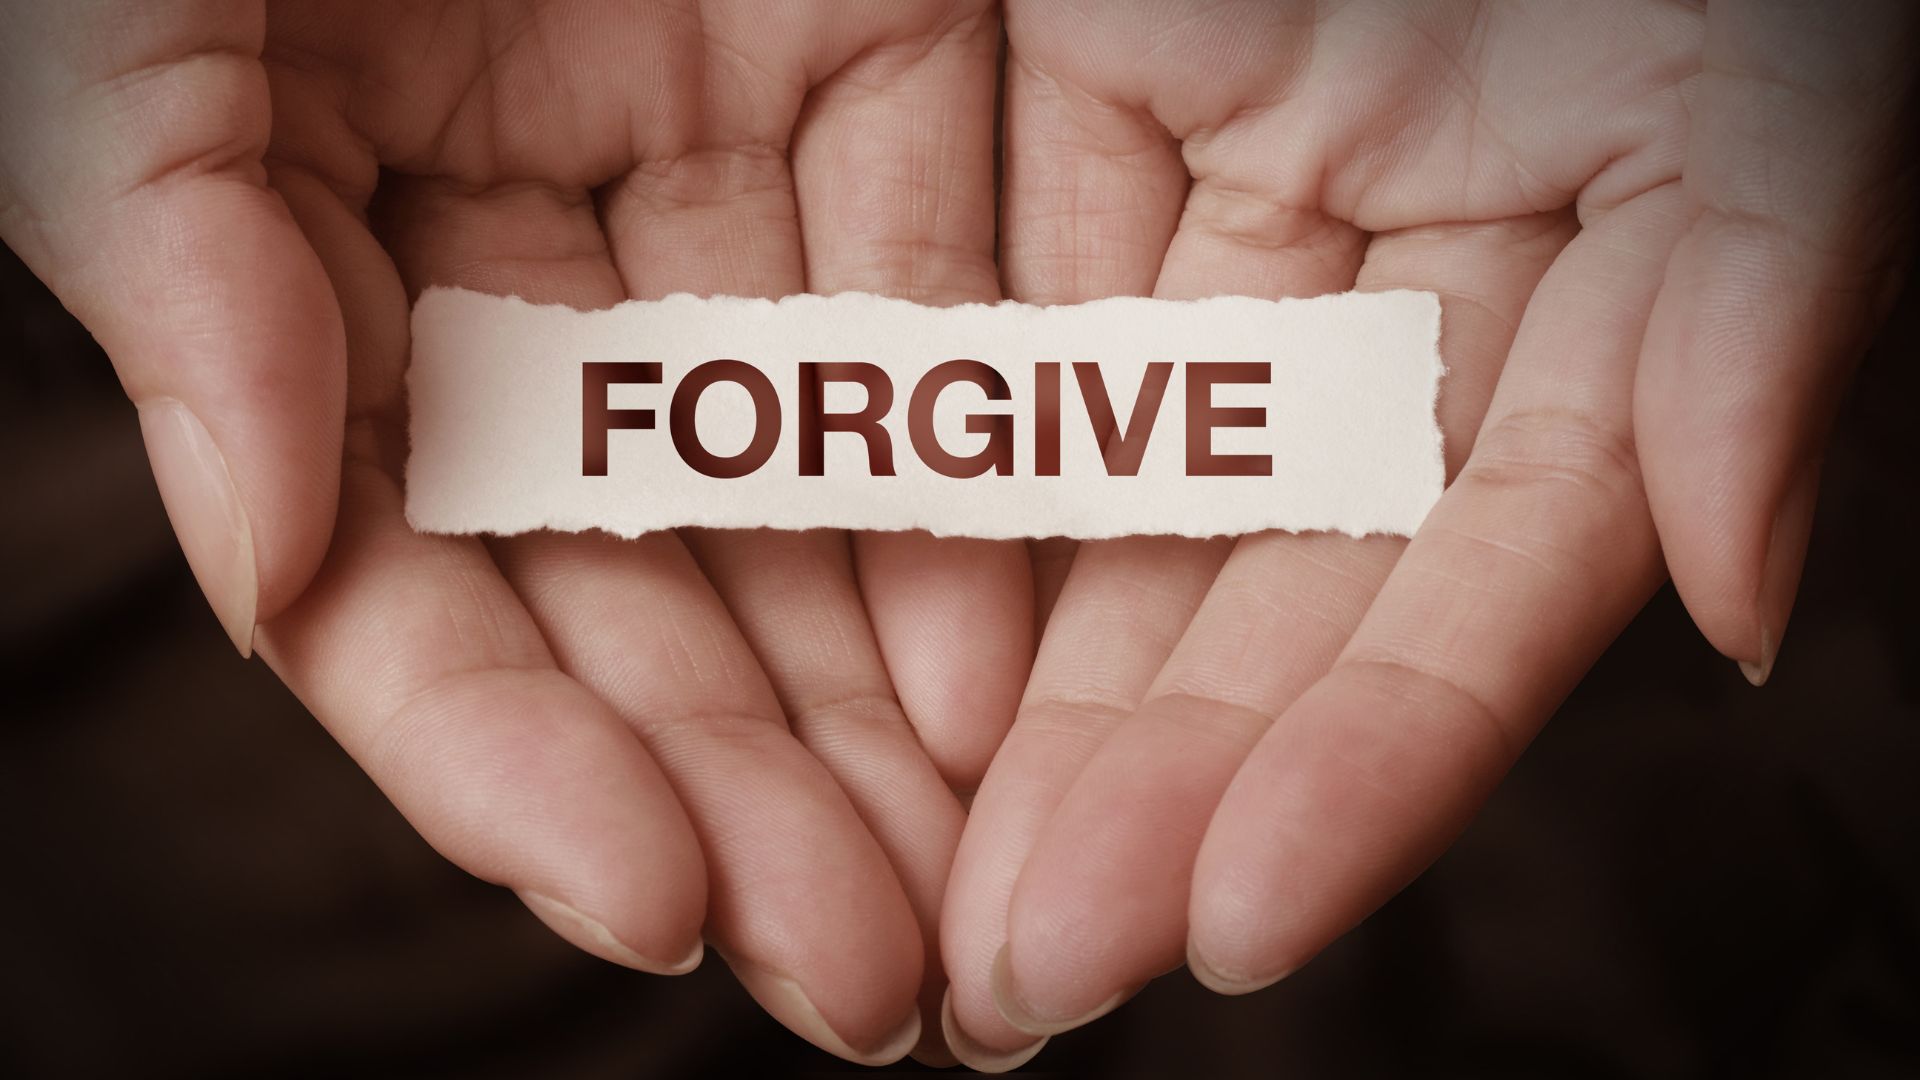 Forgive(赦し）と書かれた文字